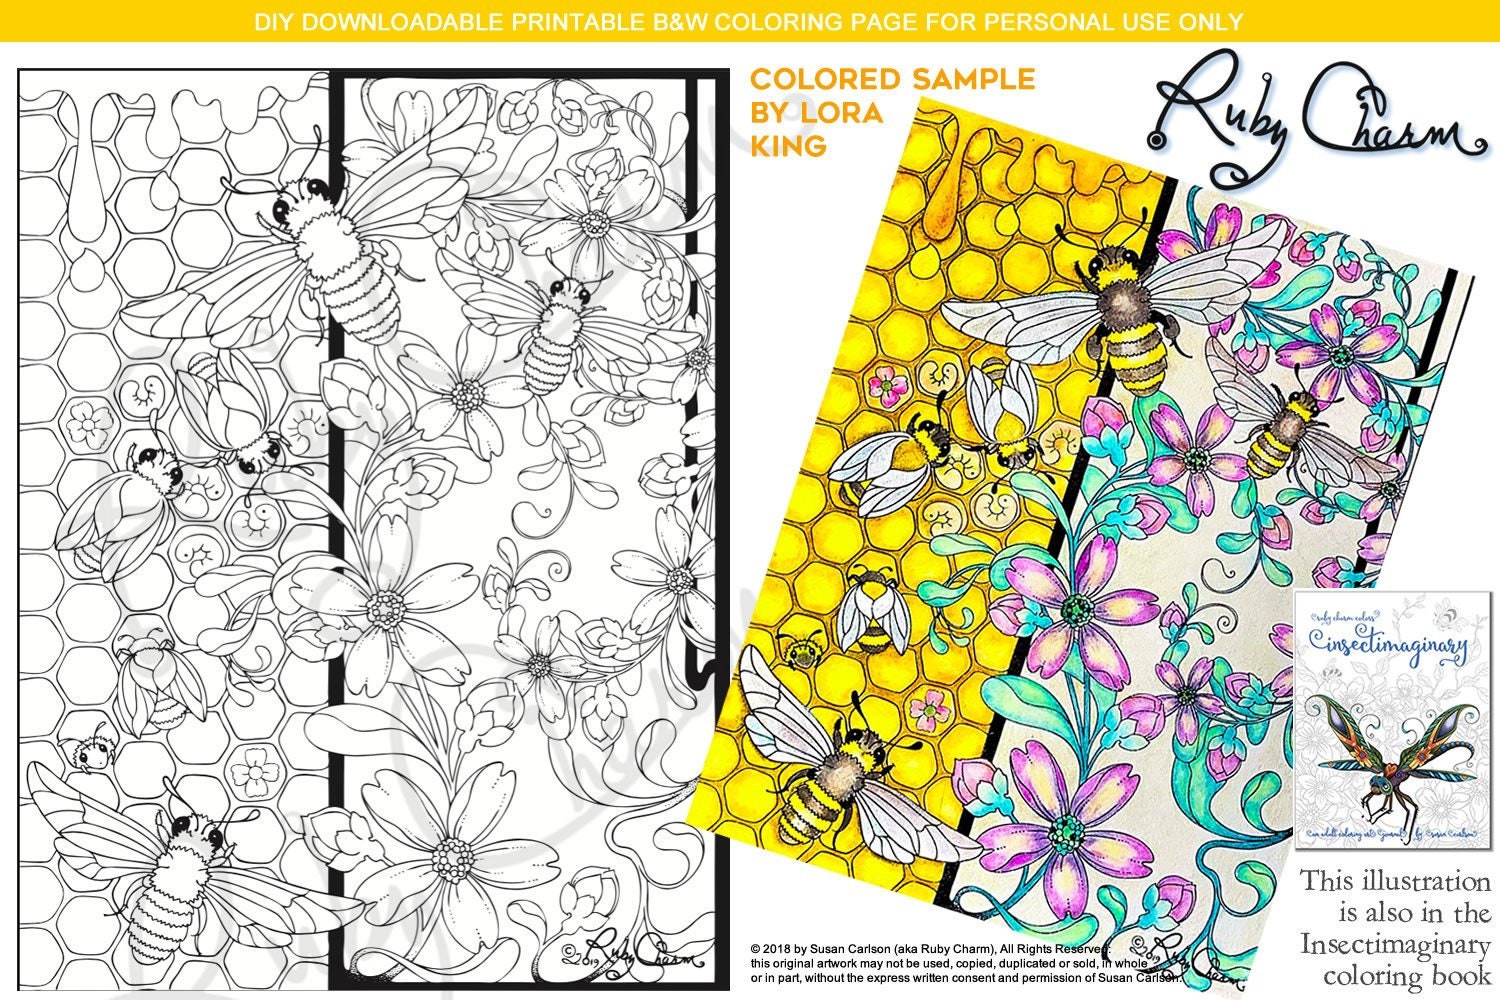 60 Mandala Coloring Pages Kaleidomania: Printable Coloring Book